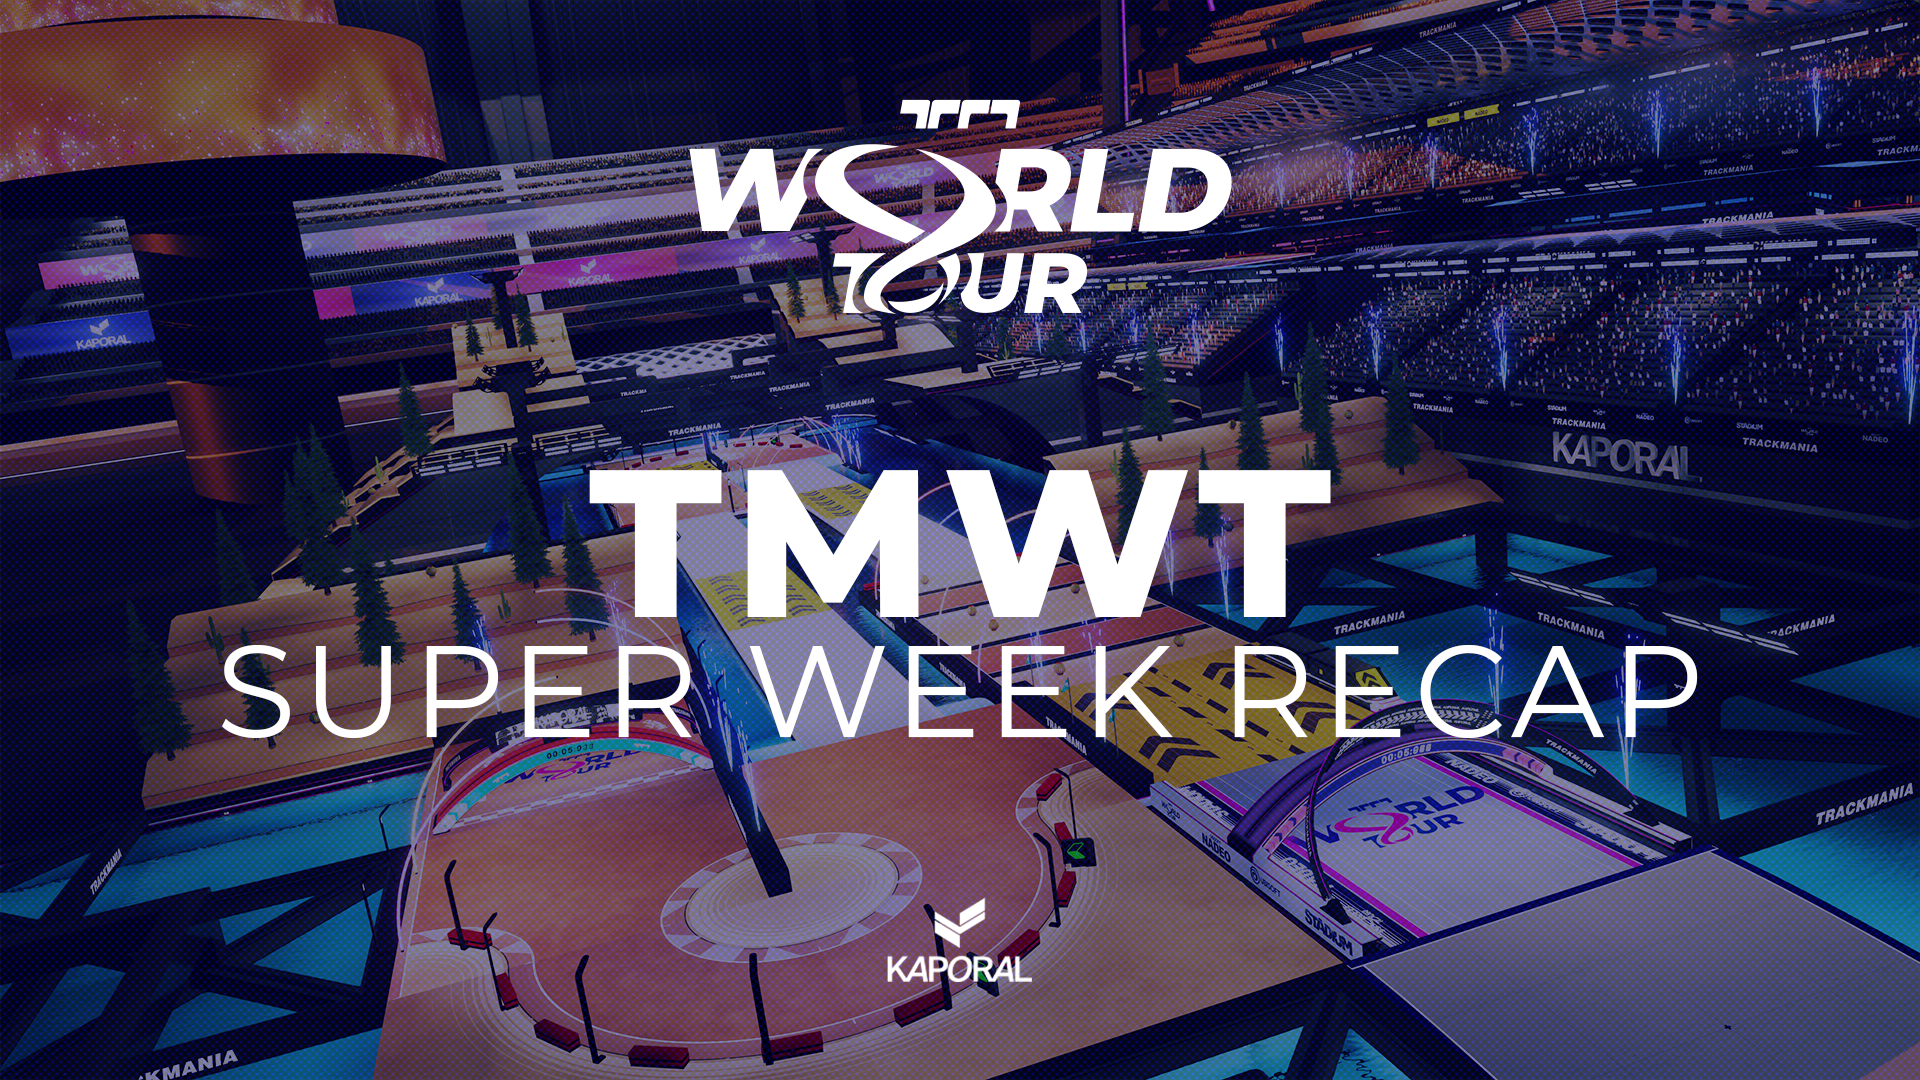 Trackmania World Tour Super Weekend recap 